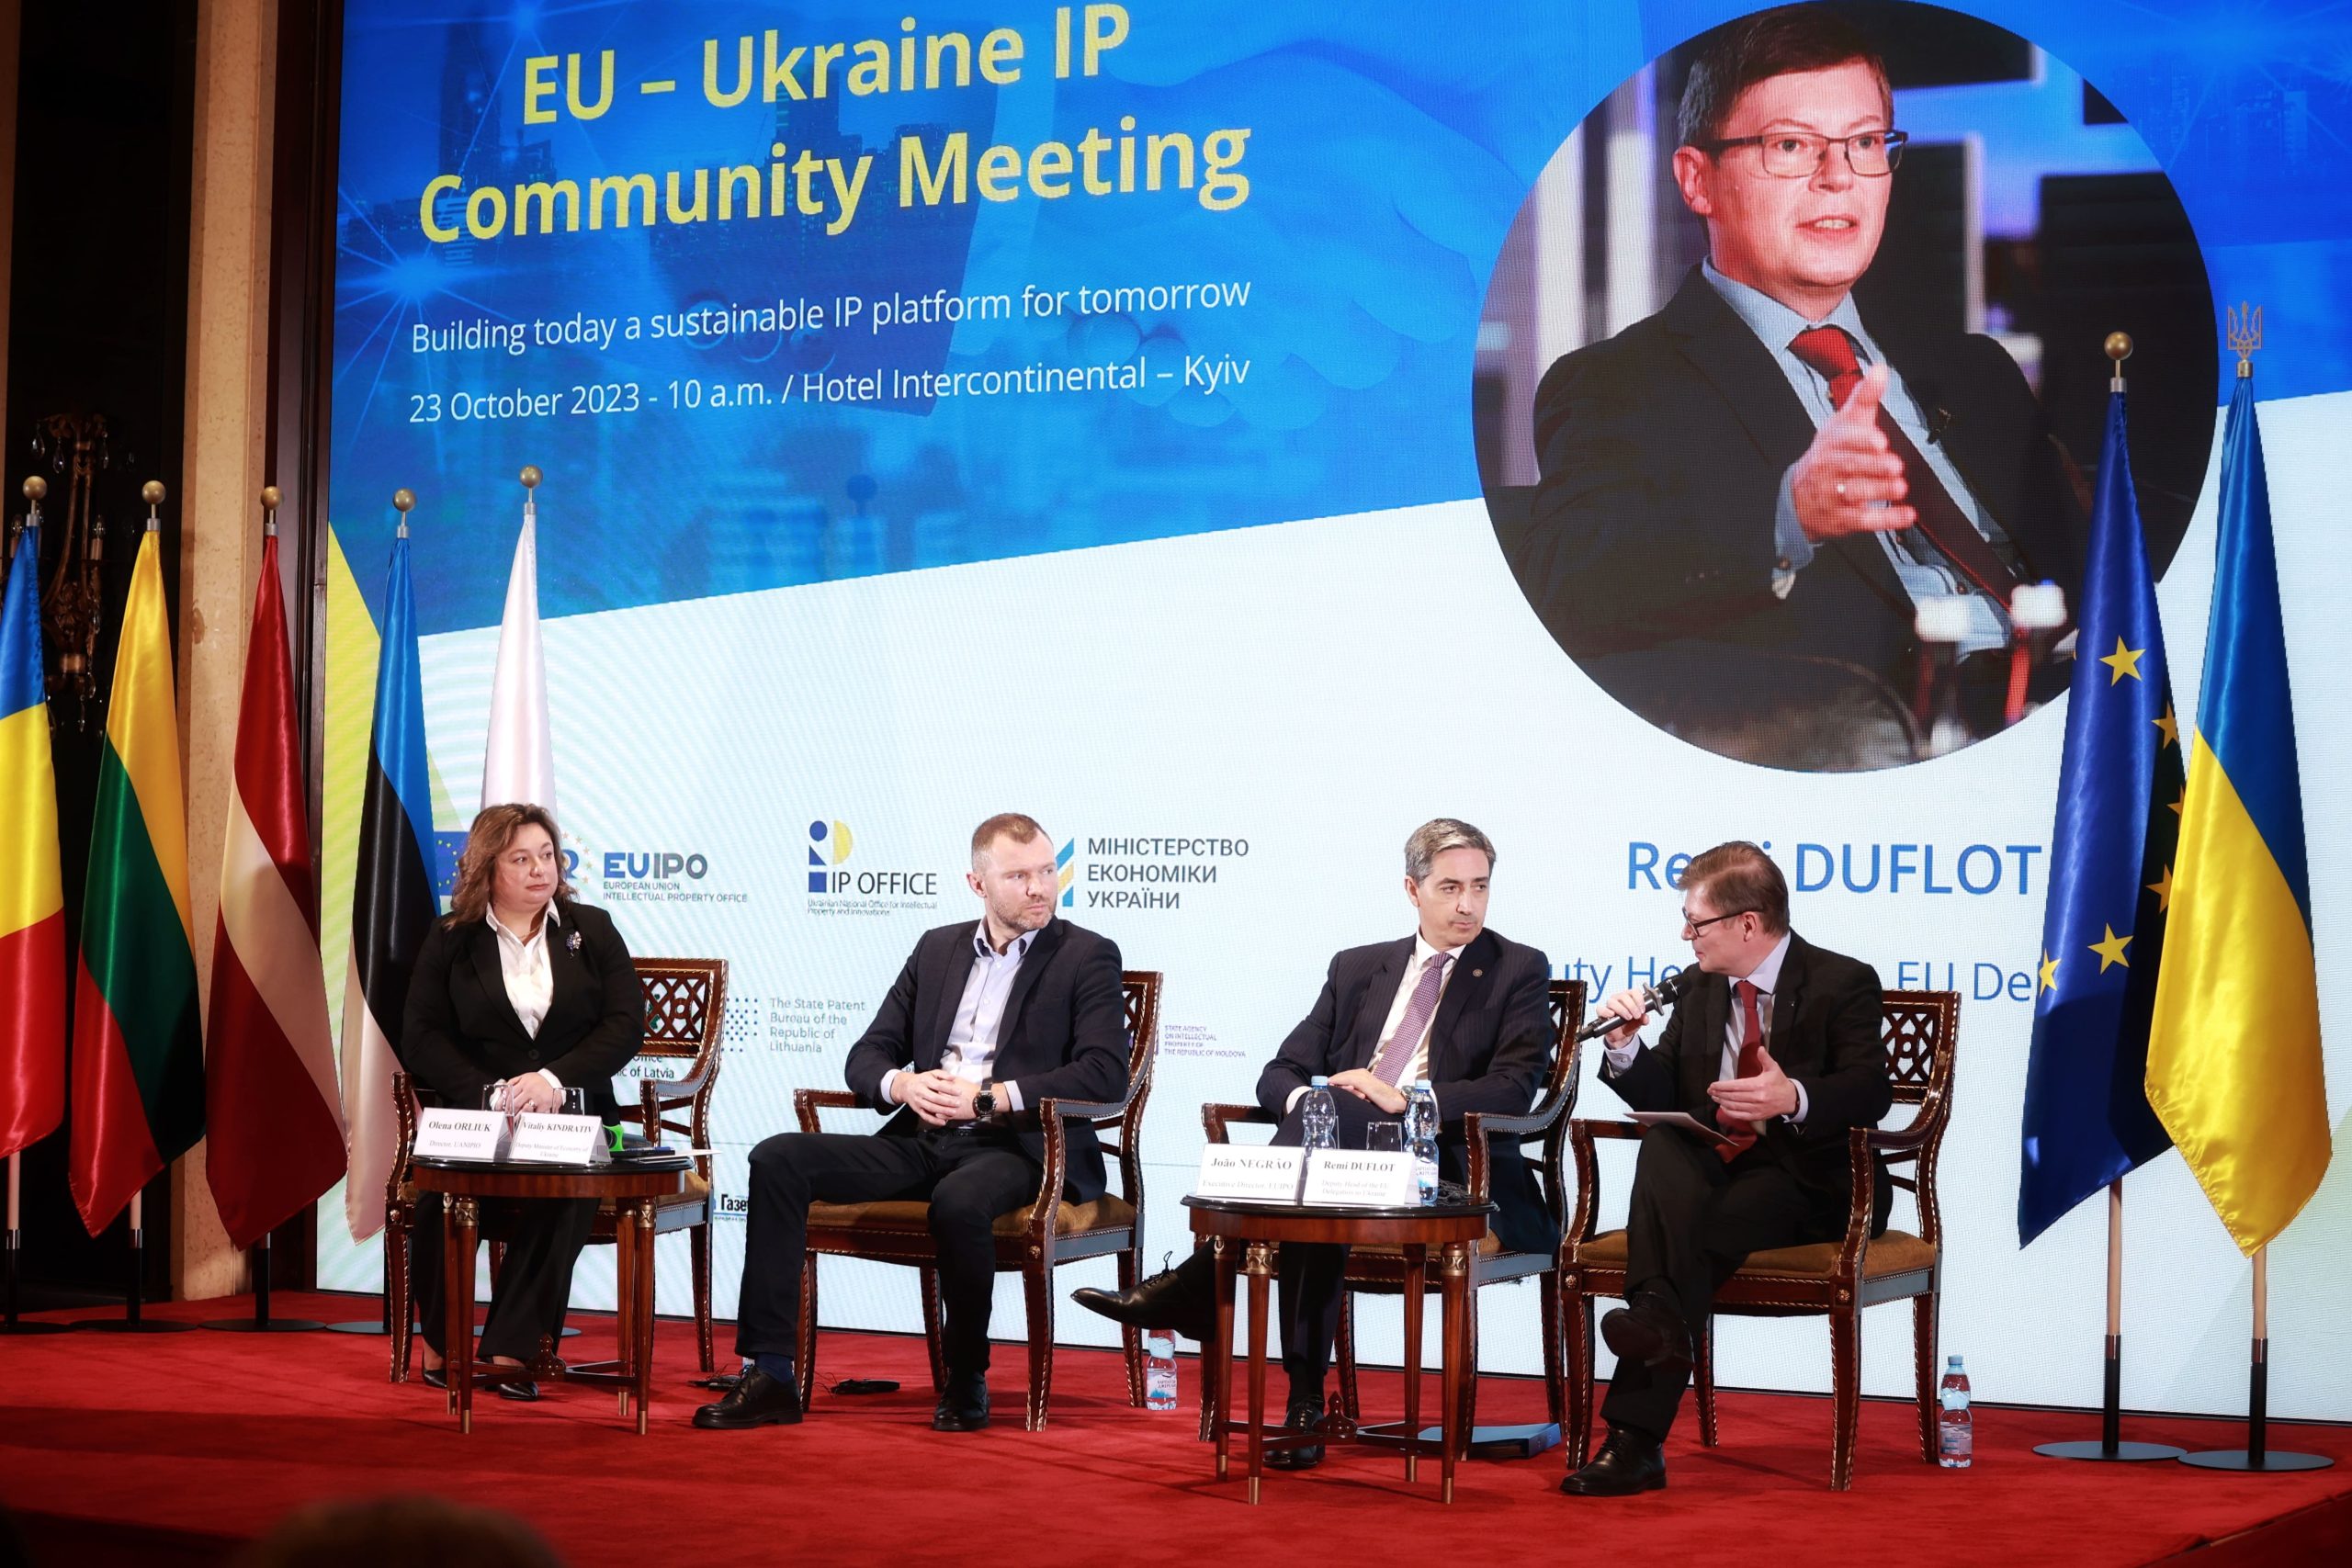 Remi Duflot, Deputy Head of EU Delegation to Ukraine: Progress in IP sphere brings cooperation between Ukraine and European Union to a new level